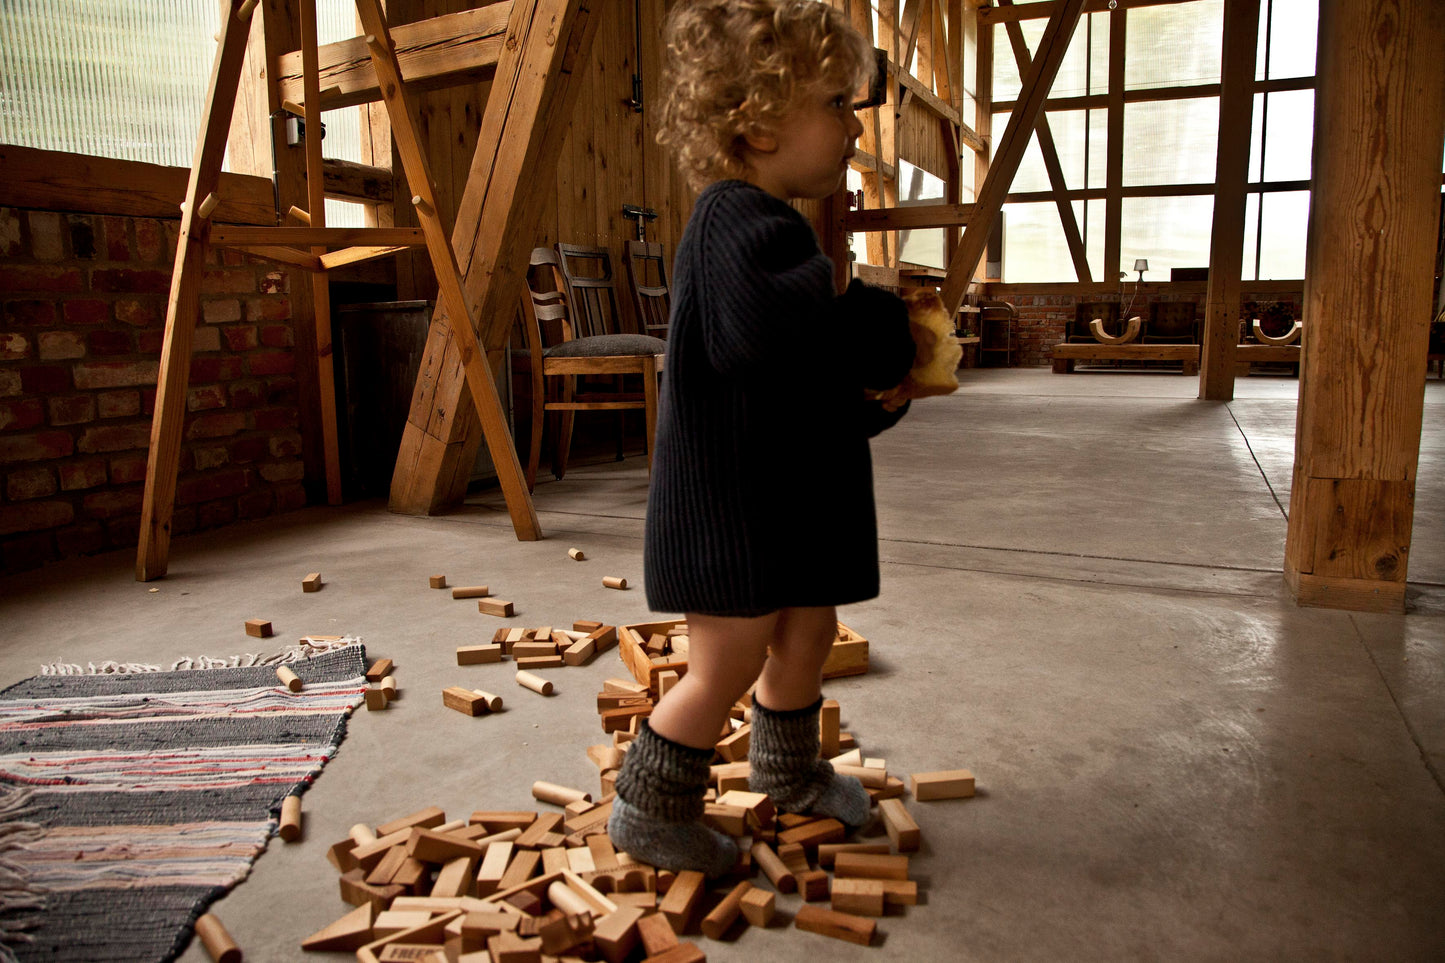 Wooden Story - Natural Blocks In Sack - 100 pcs